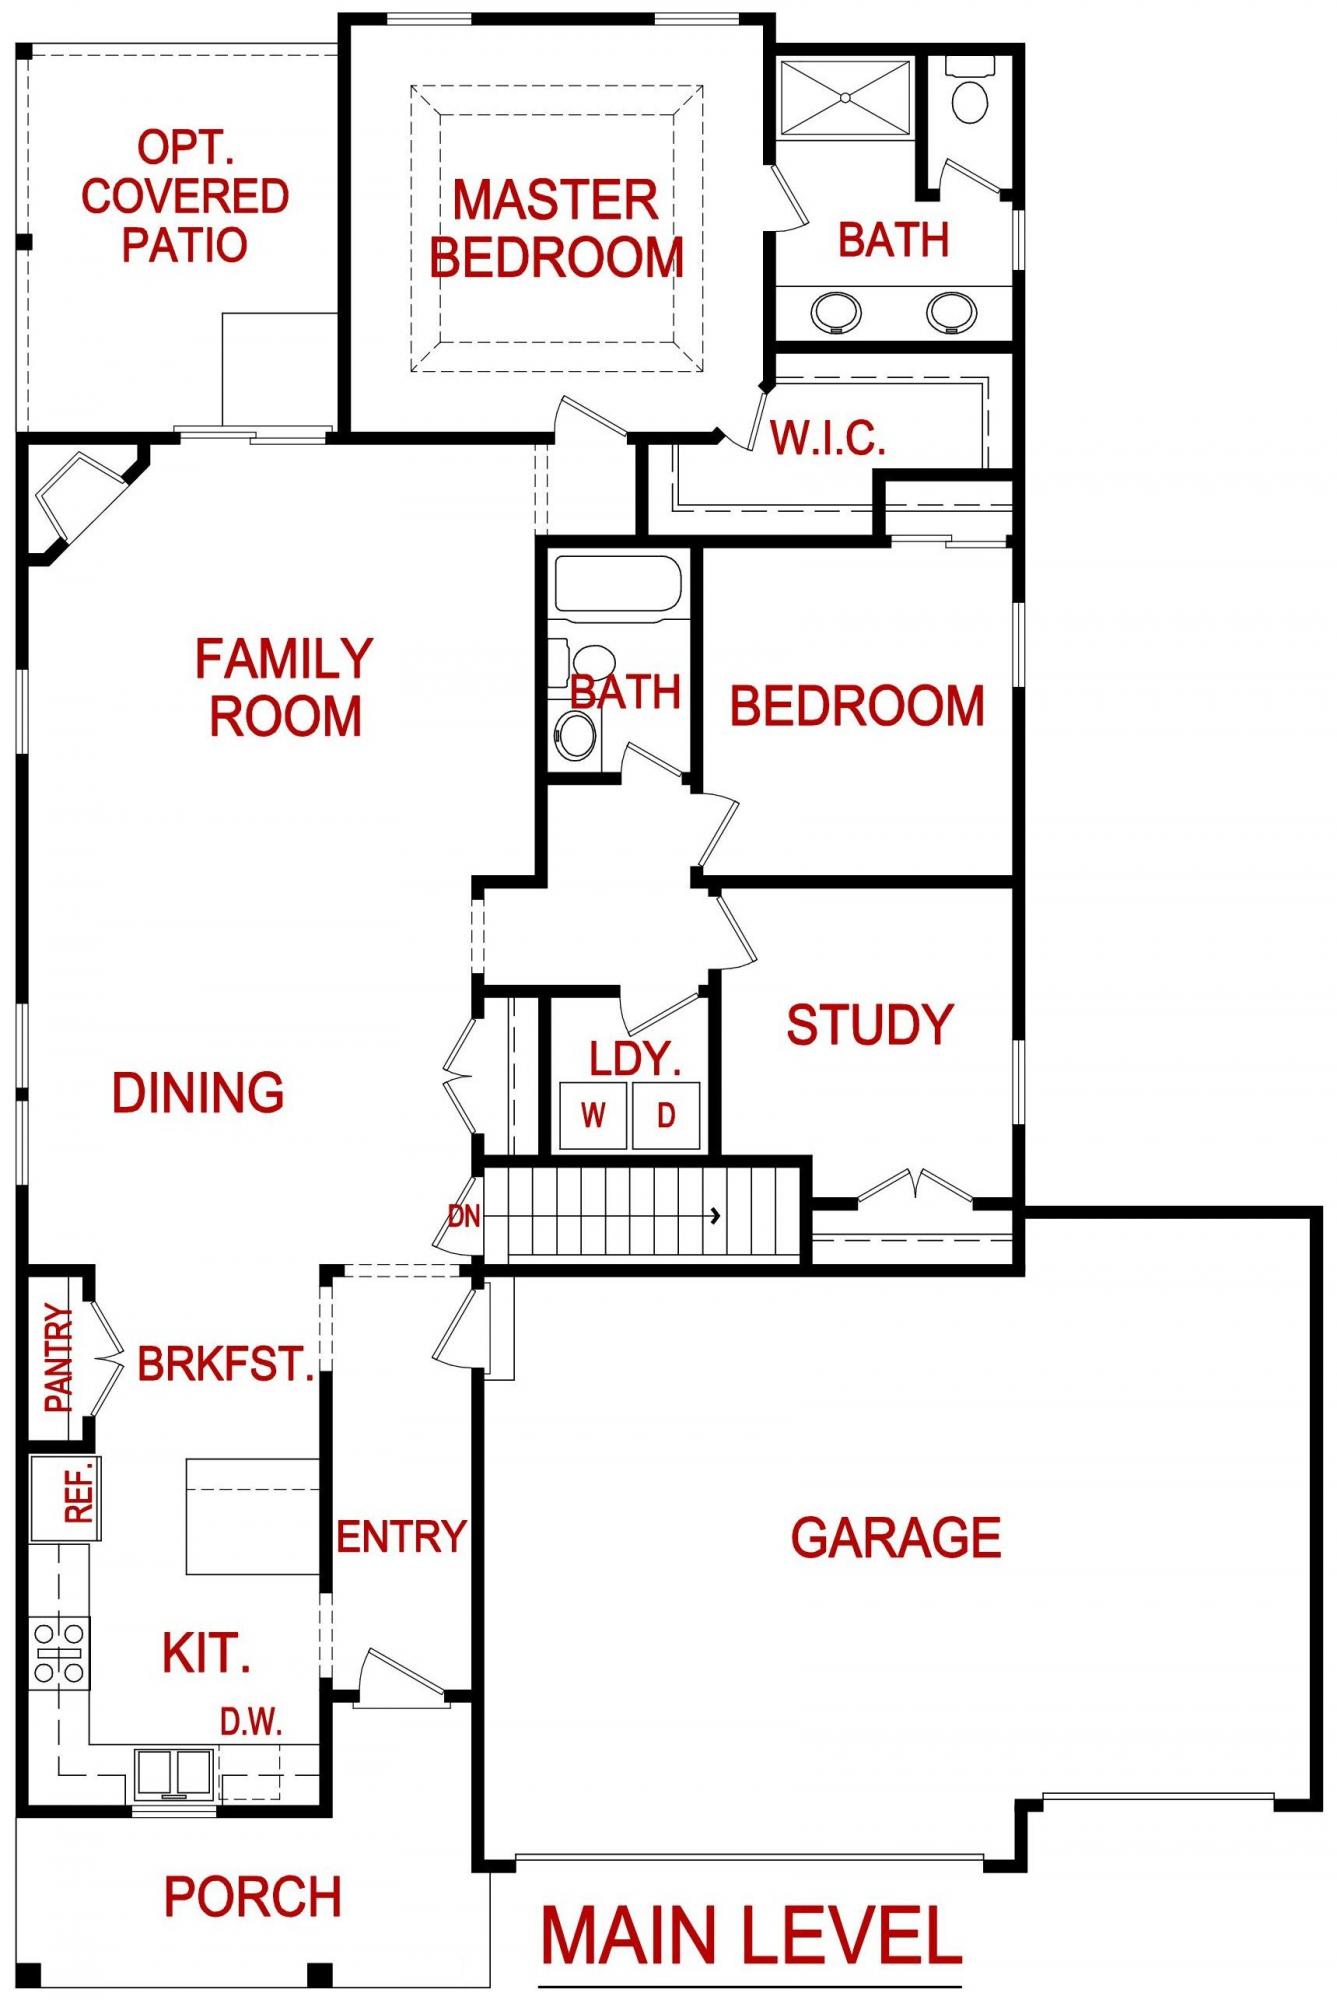 Main level Floor plan of a Bradford model from lambie custom homes